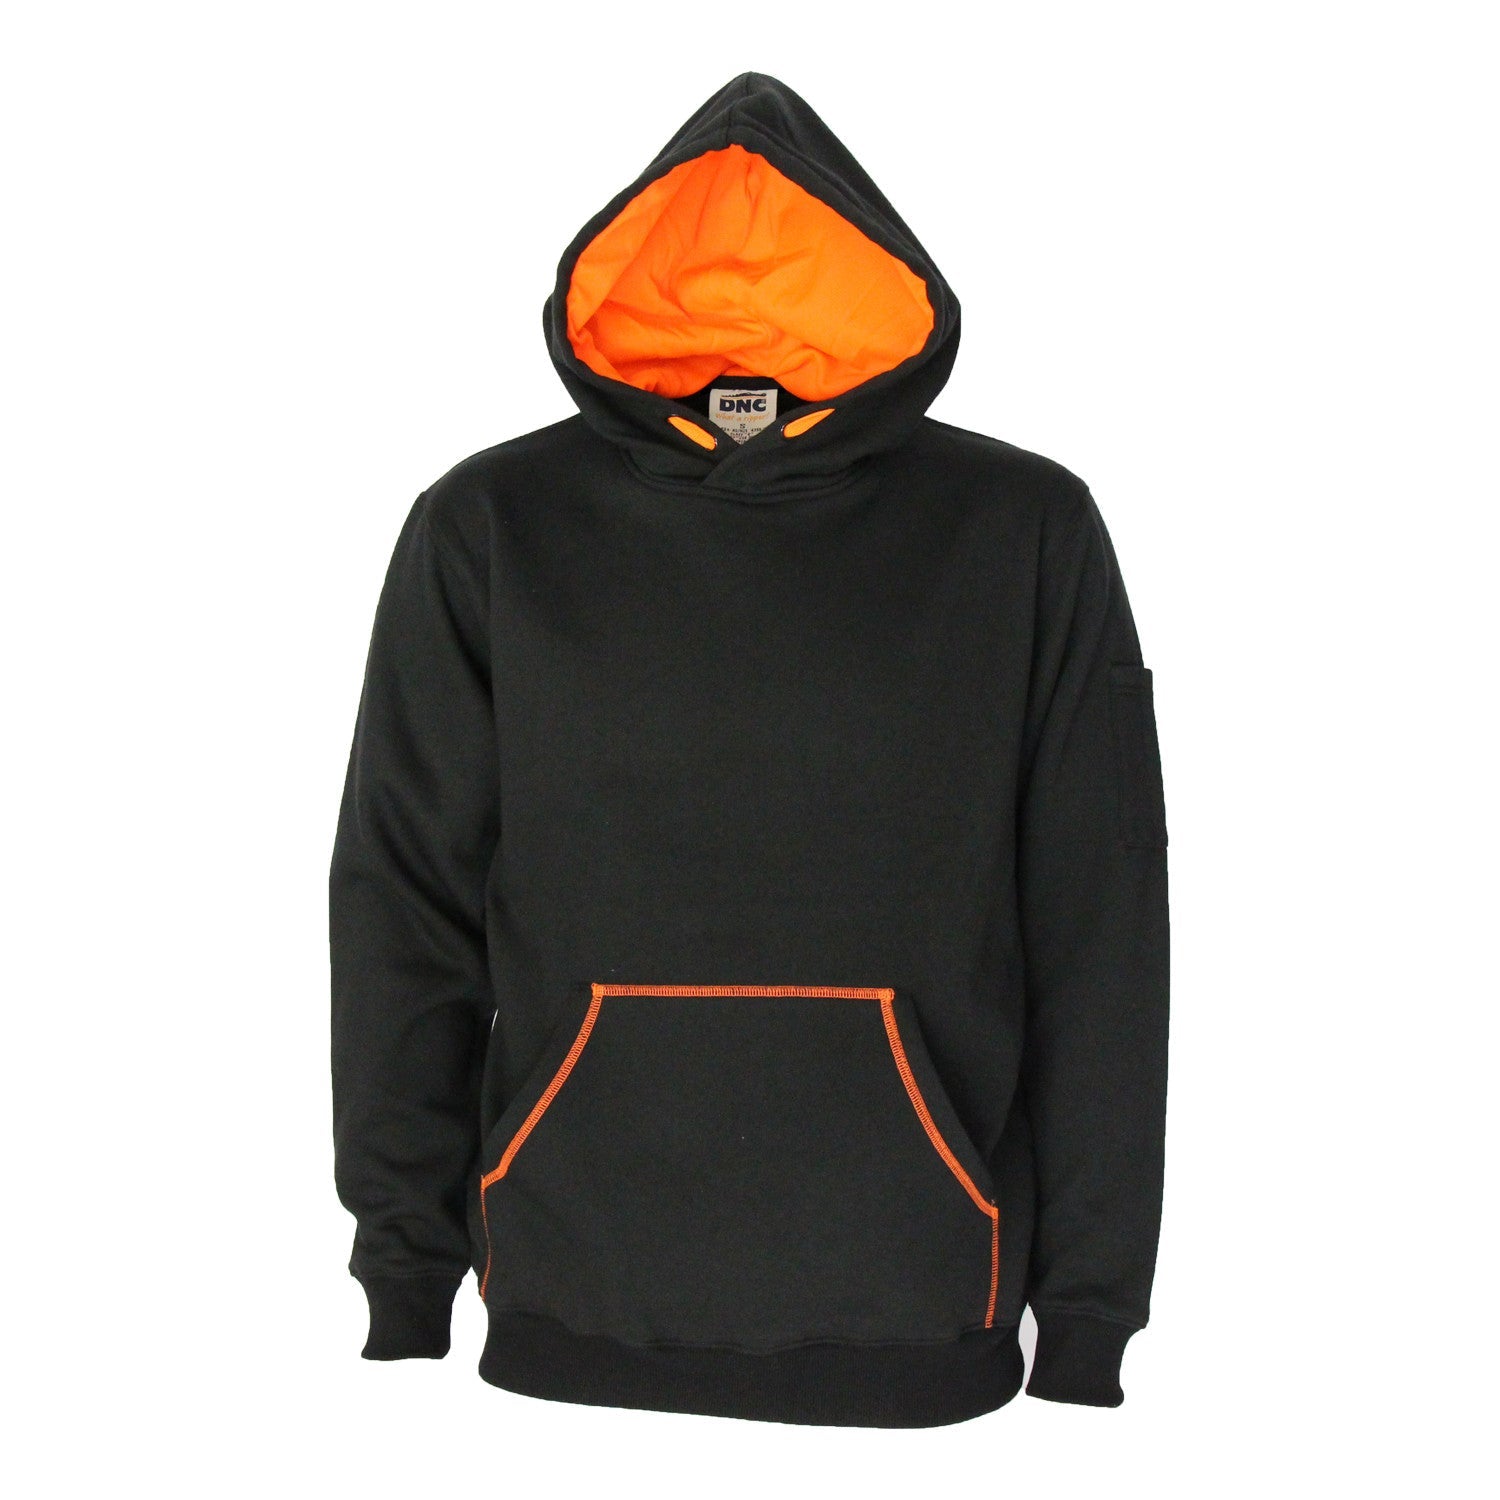 DNC Kangaroo pocket super brushed fleece hoodie (5423)